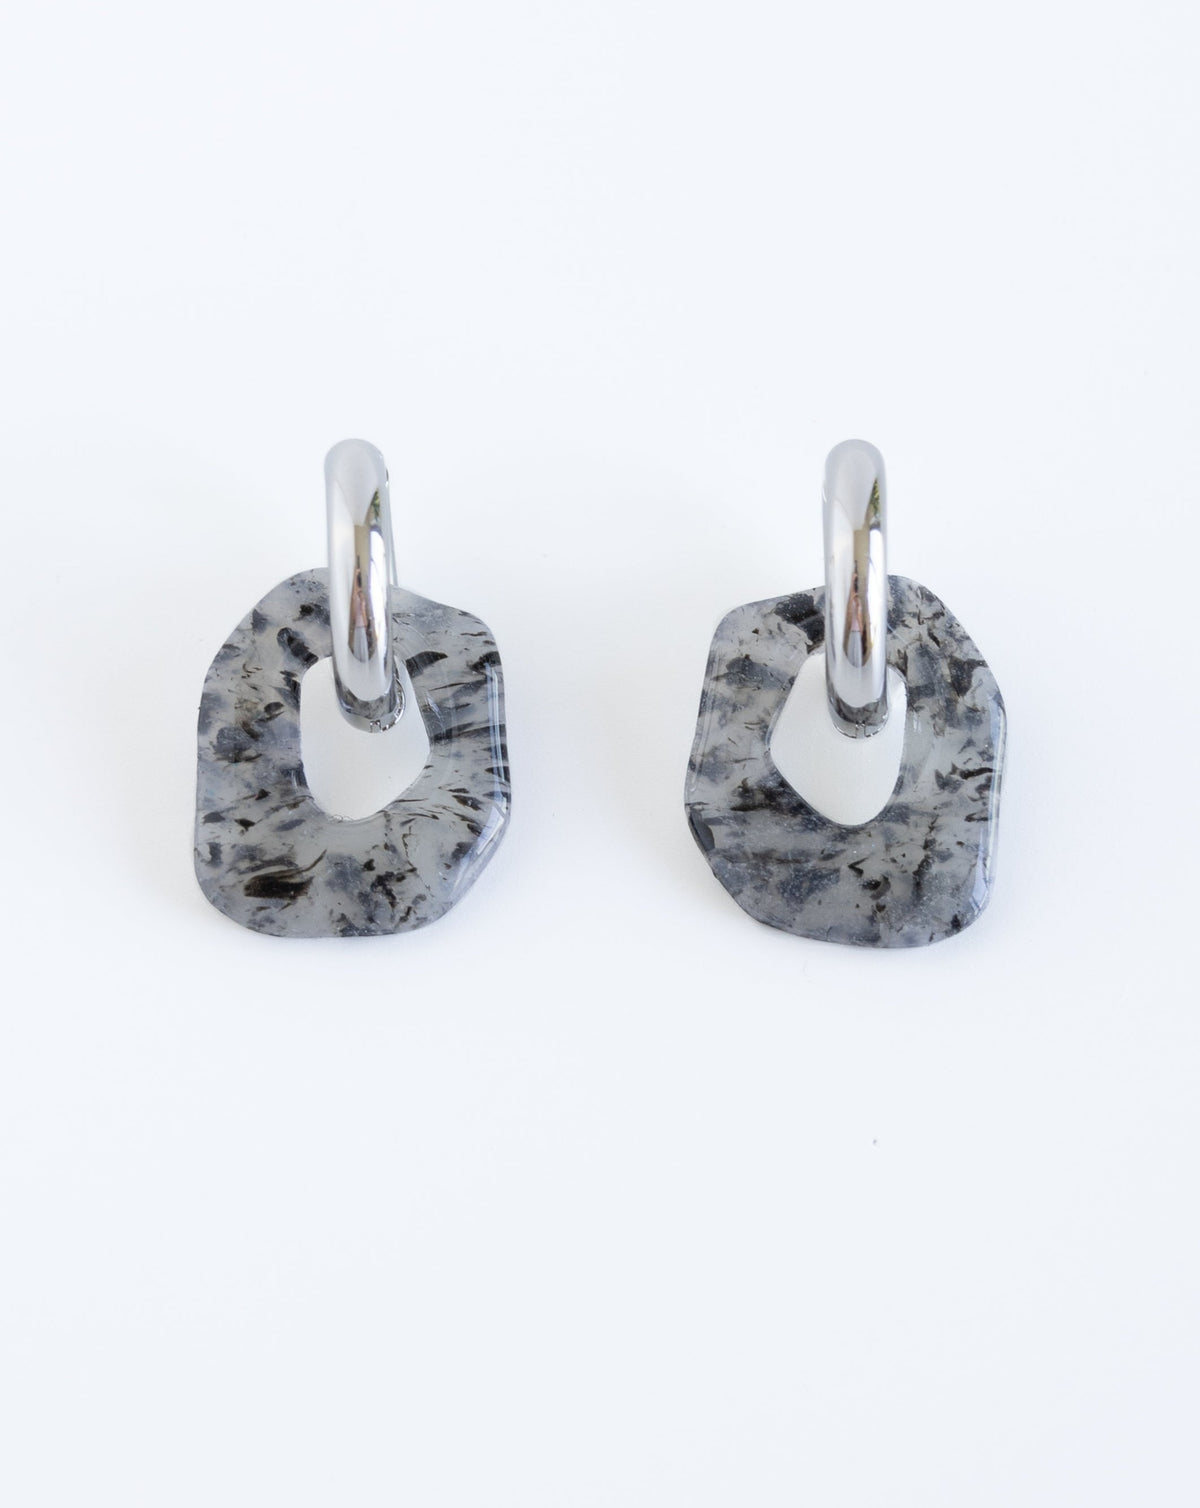 Darien earrings in black Marble pattern with silver hoops, front view